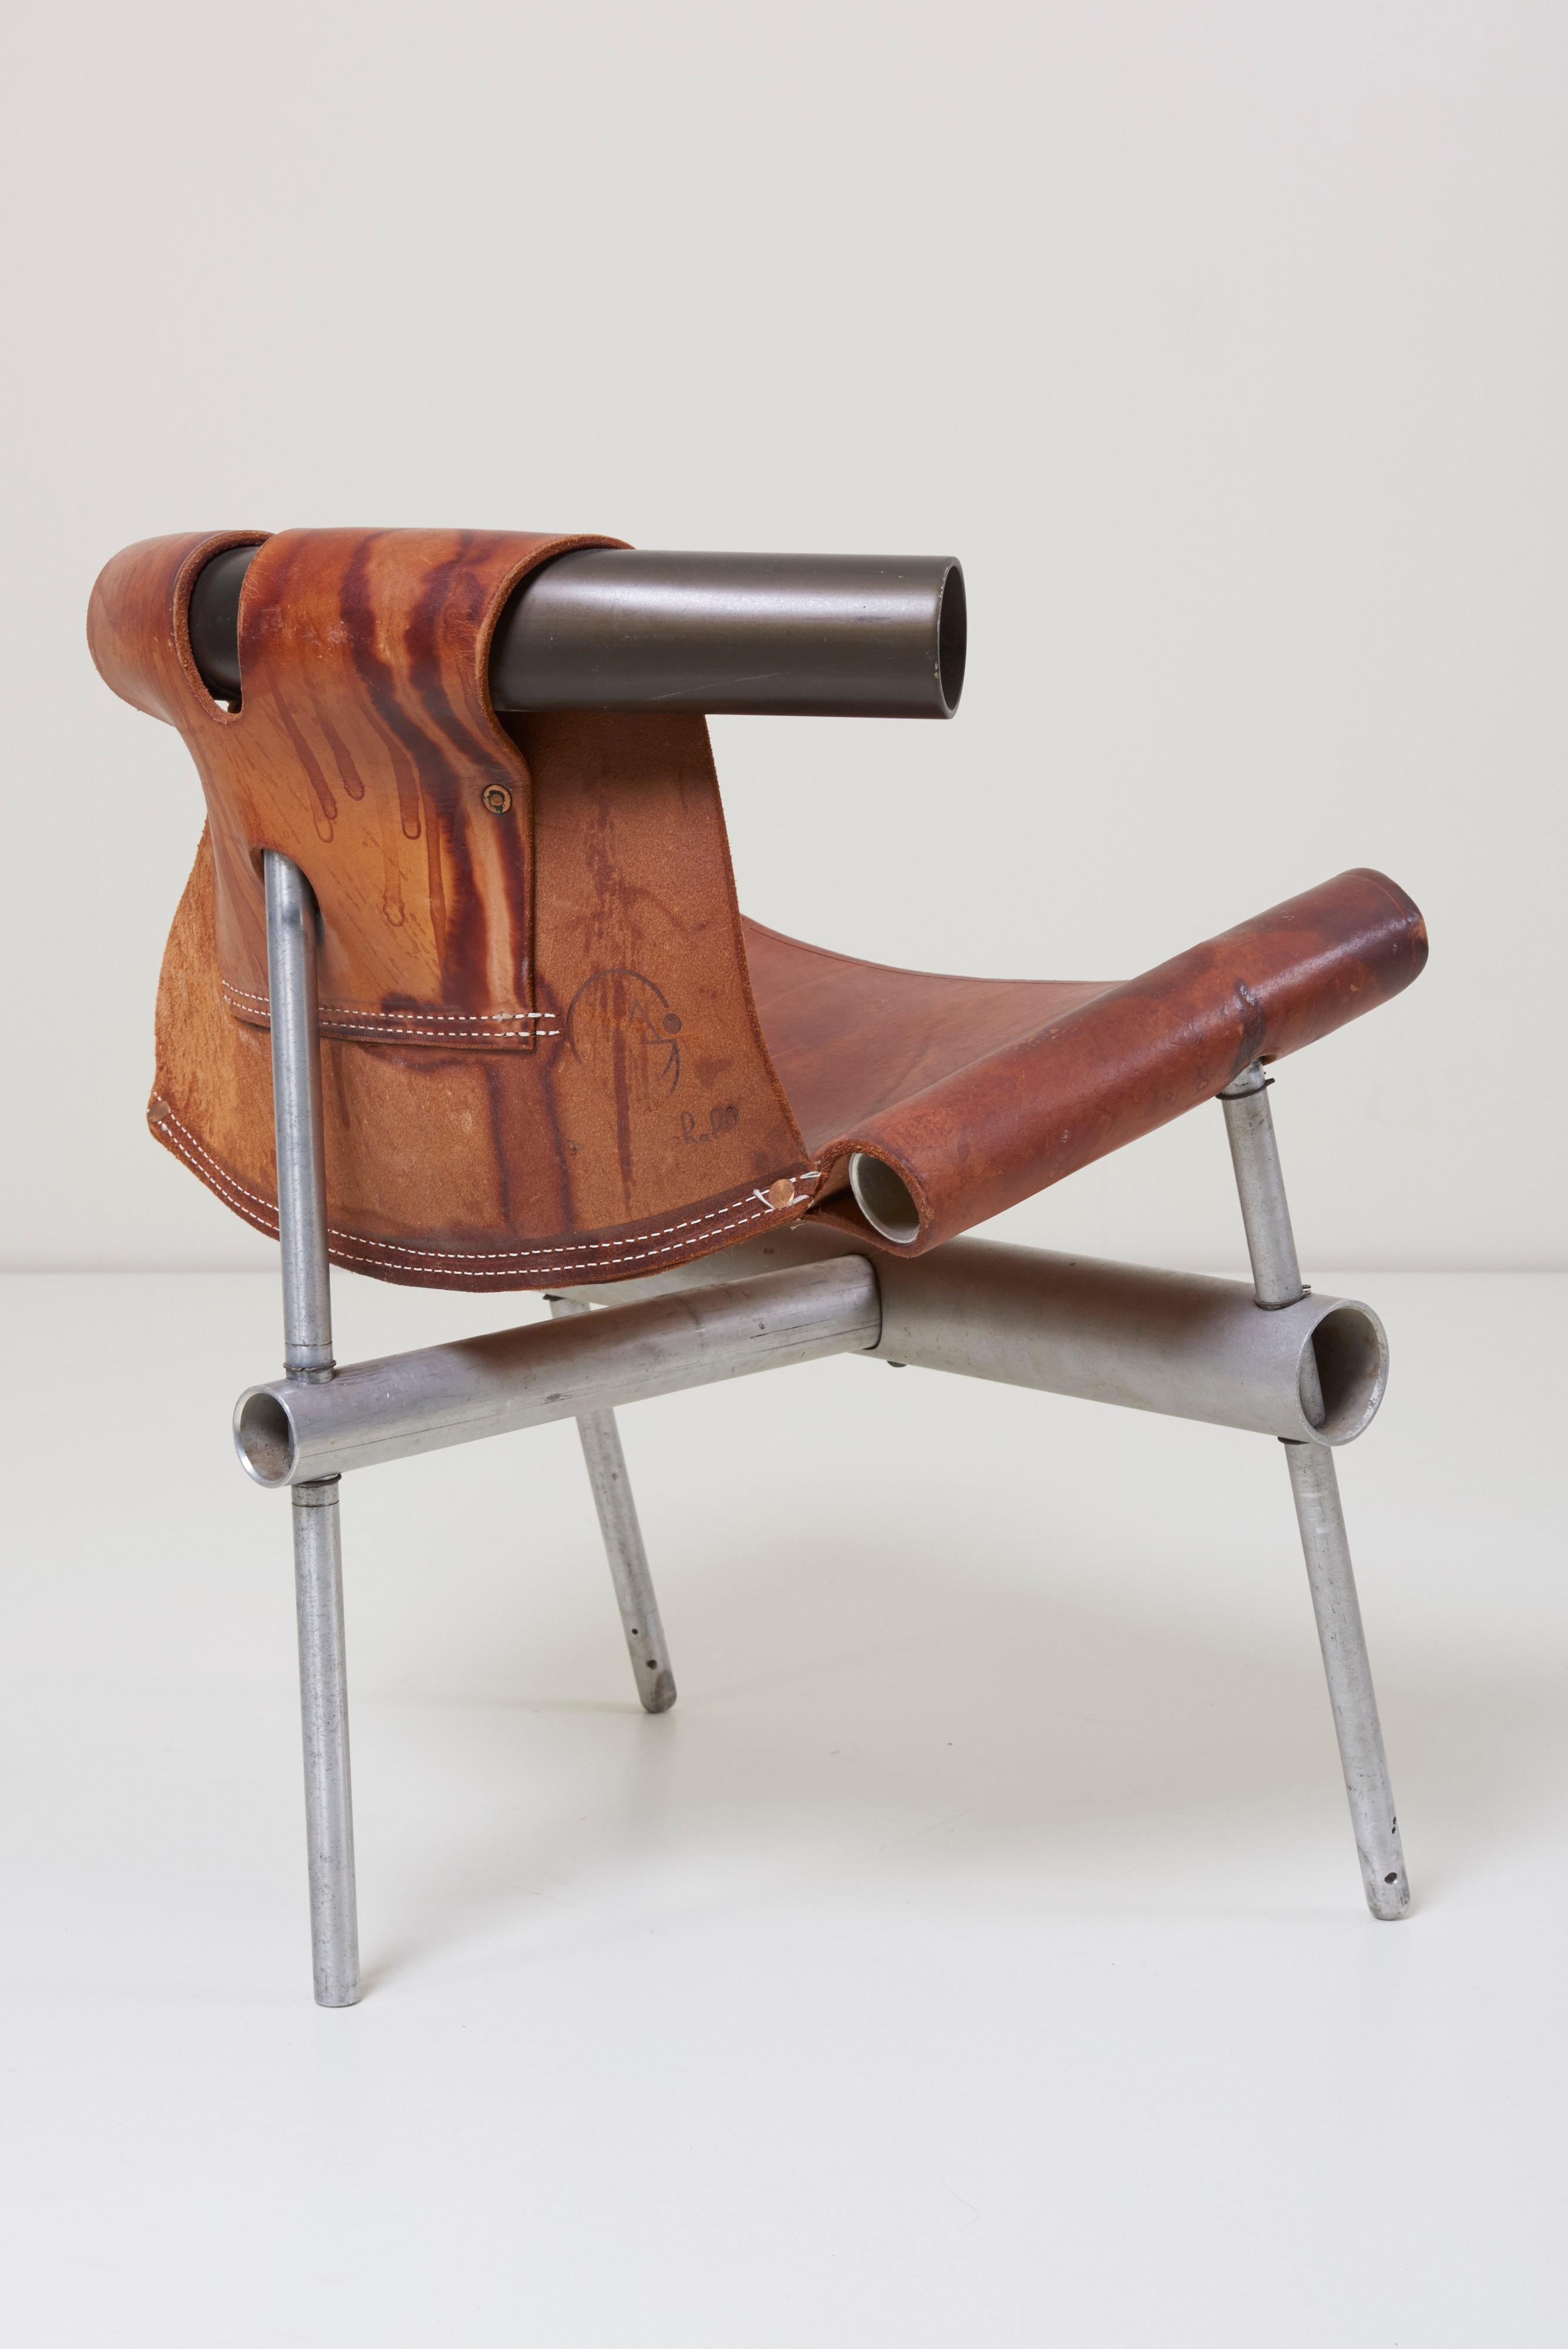 Metal Max Gottschalk Prototype Leather Sling Chair, US, 1960s